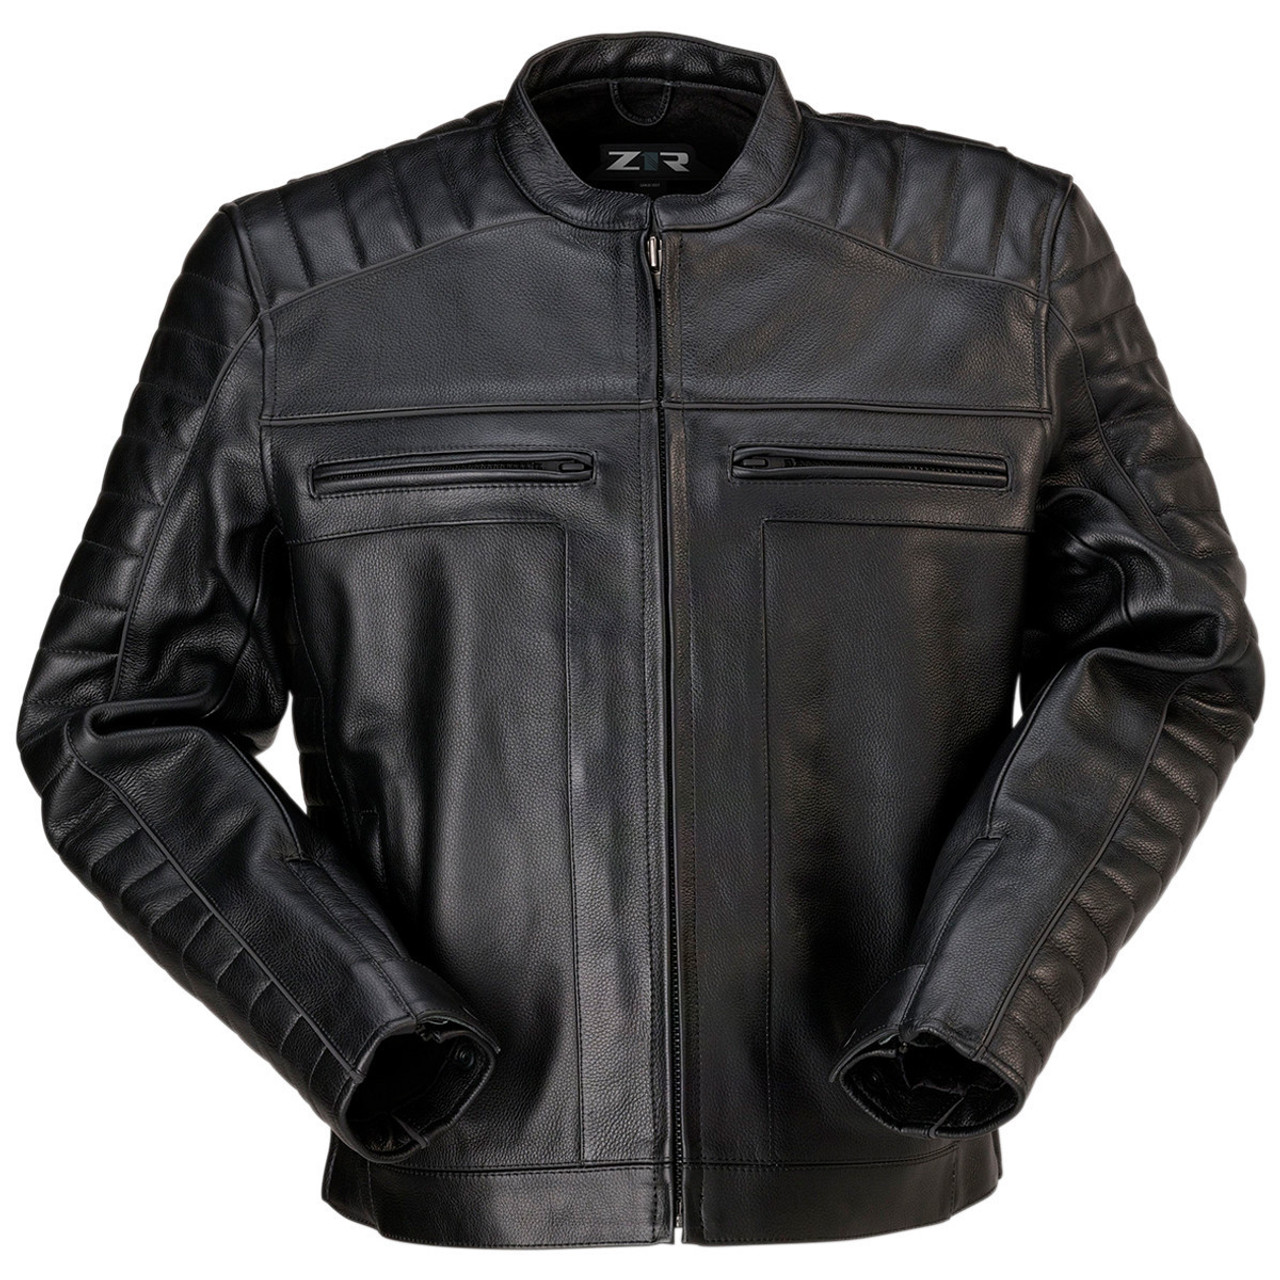 Z1R Men's Artillery Motorcycle Leather Jacket - Team Motorcycle